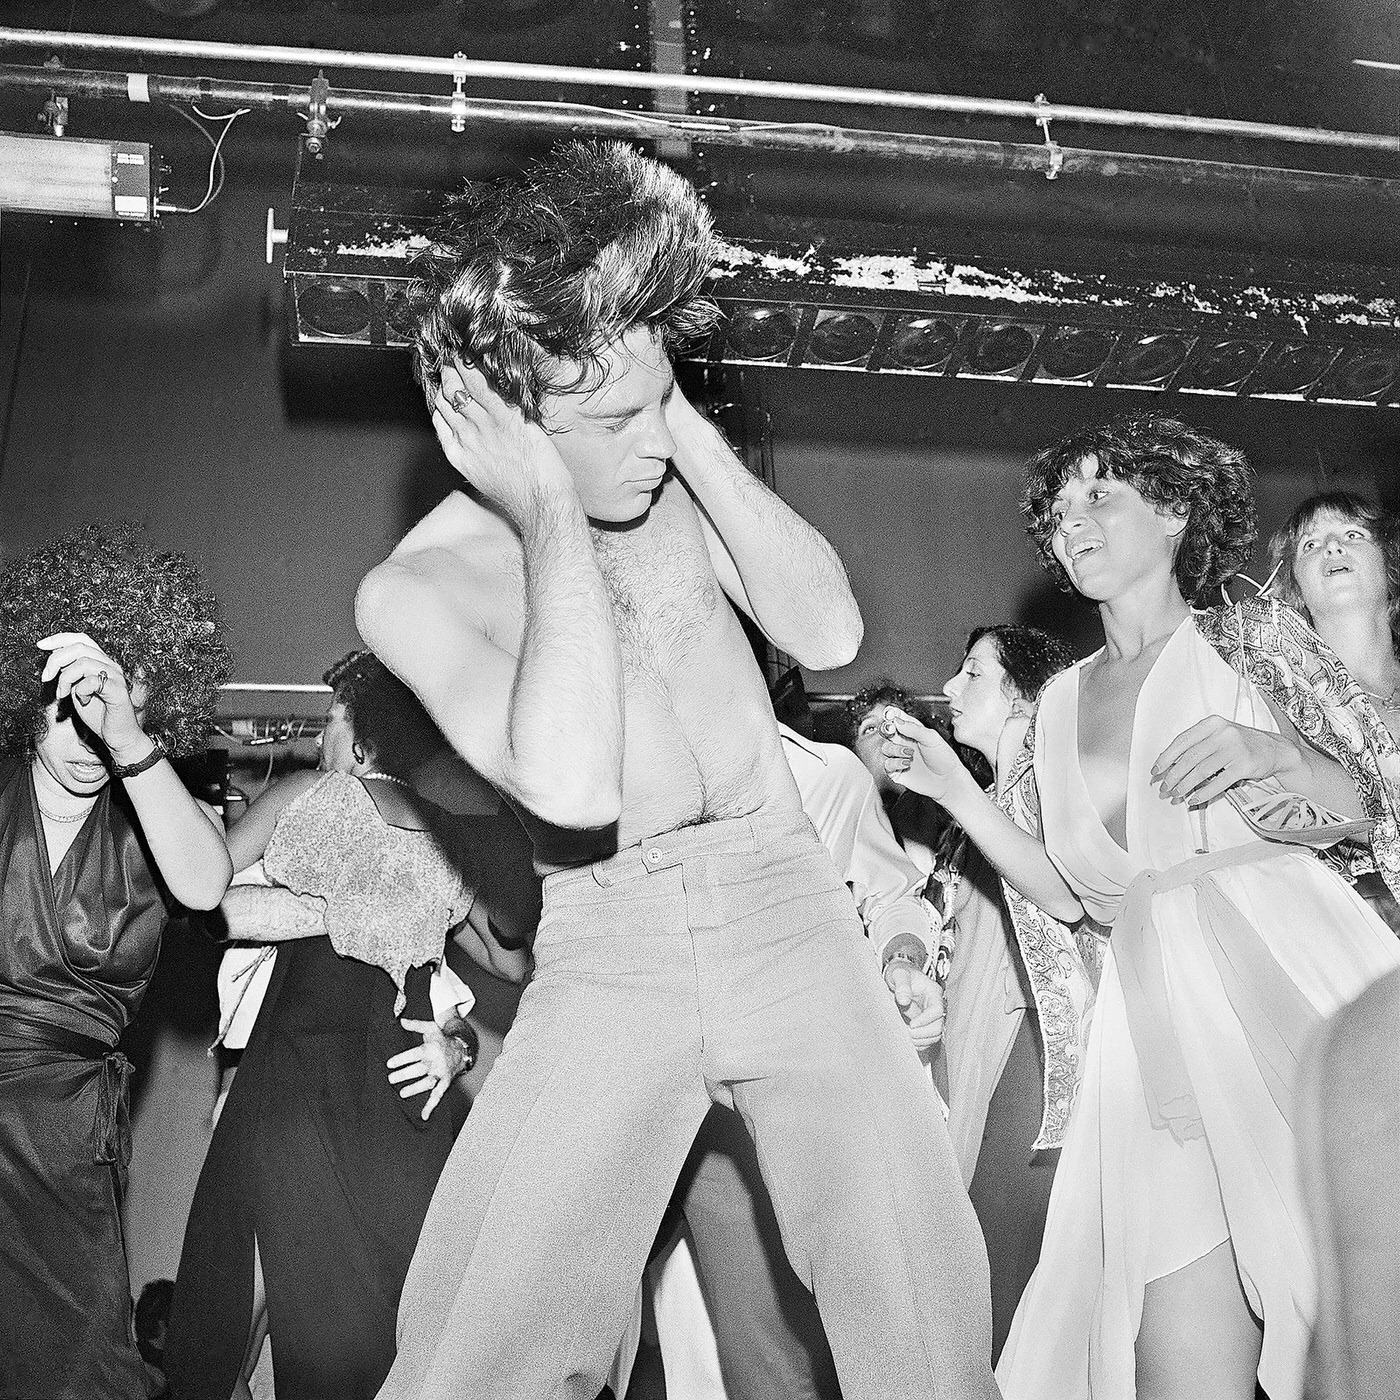 “Holding Head As Hair Flies While Dancing” With Judi Jupiter (Studio 54, New York; July, 1977).